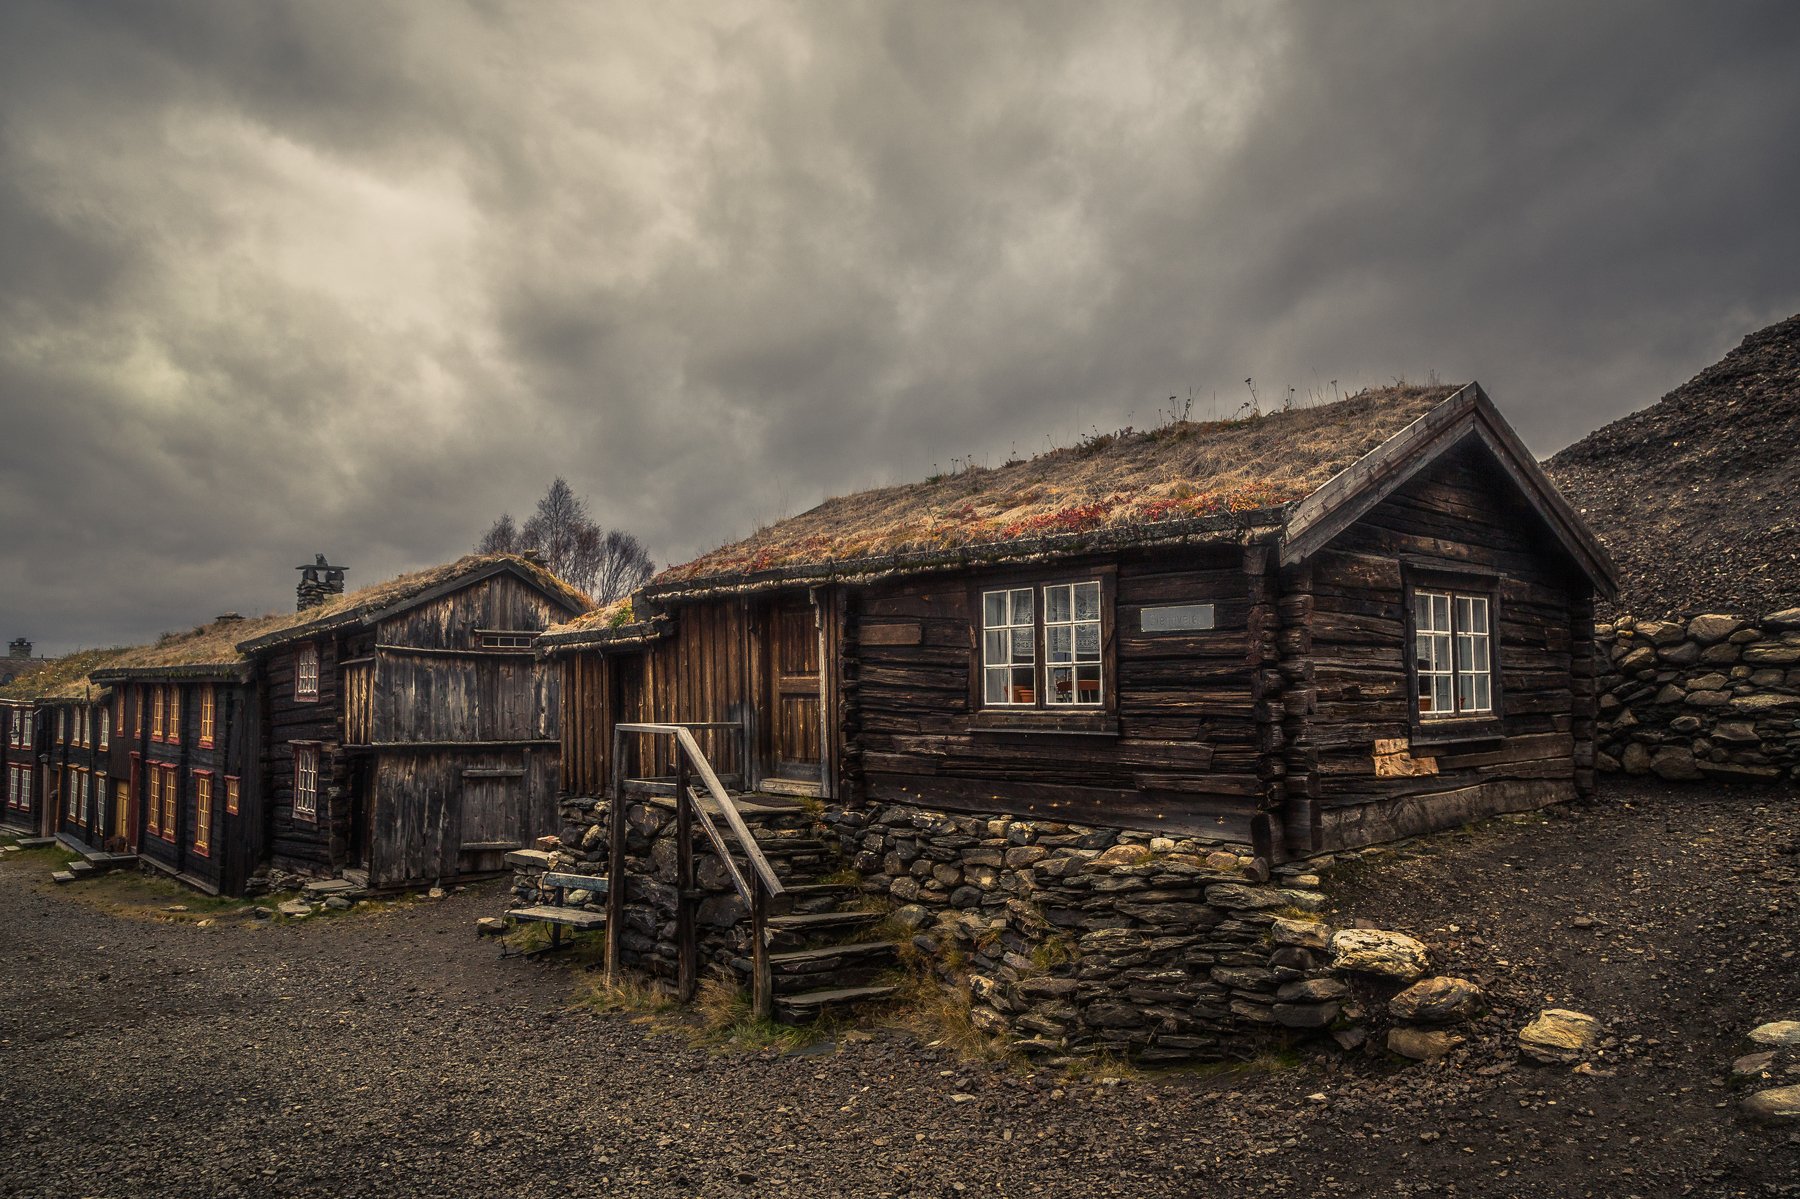 røros,norway,norwegian,mining town,houses,architecture,wooden,house,building,original,moody,unesco, Adrian Szatewicz